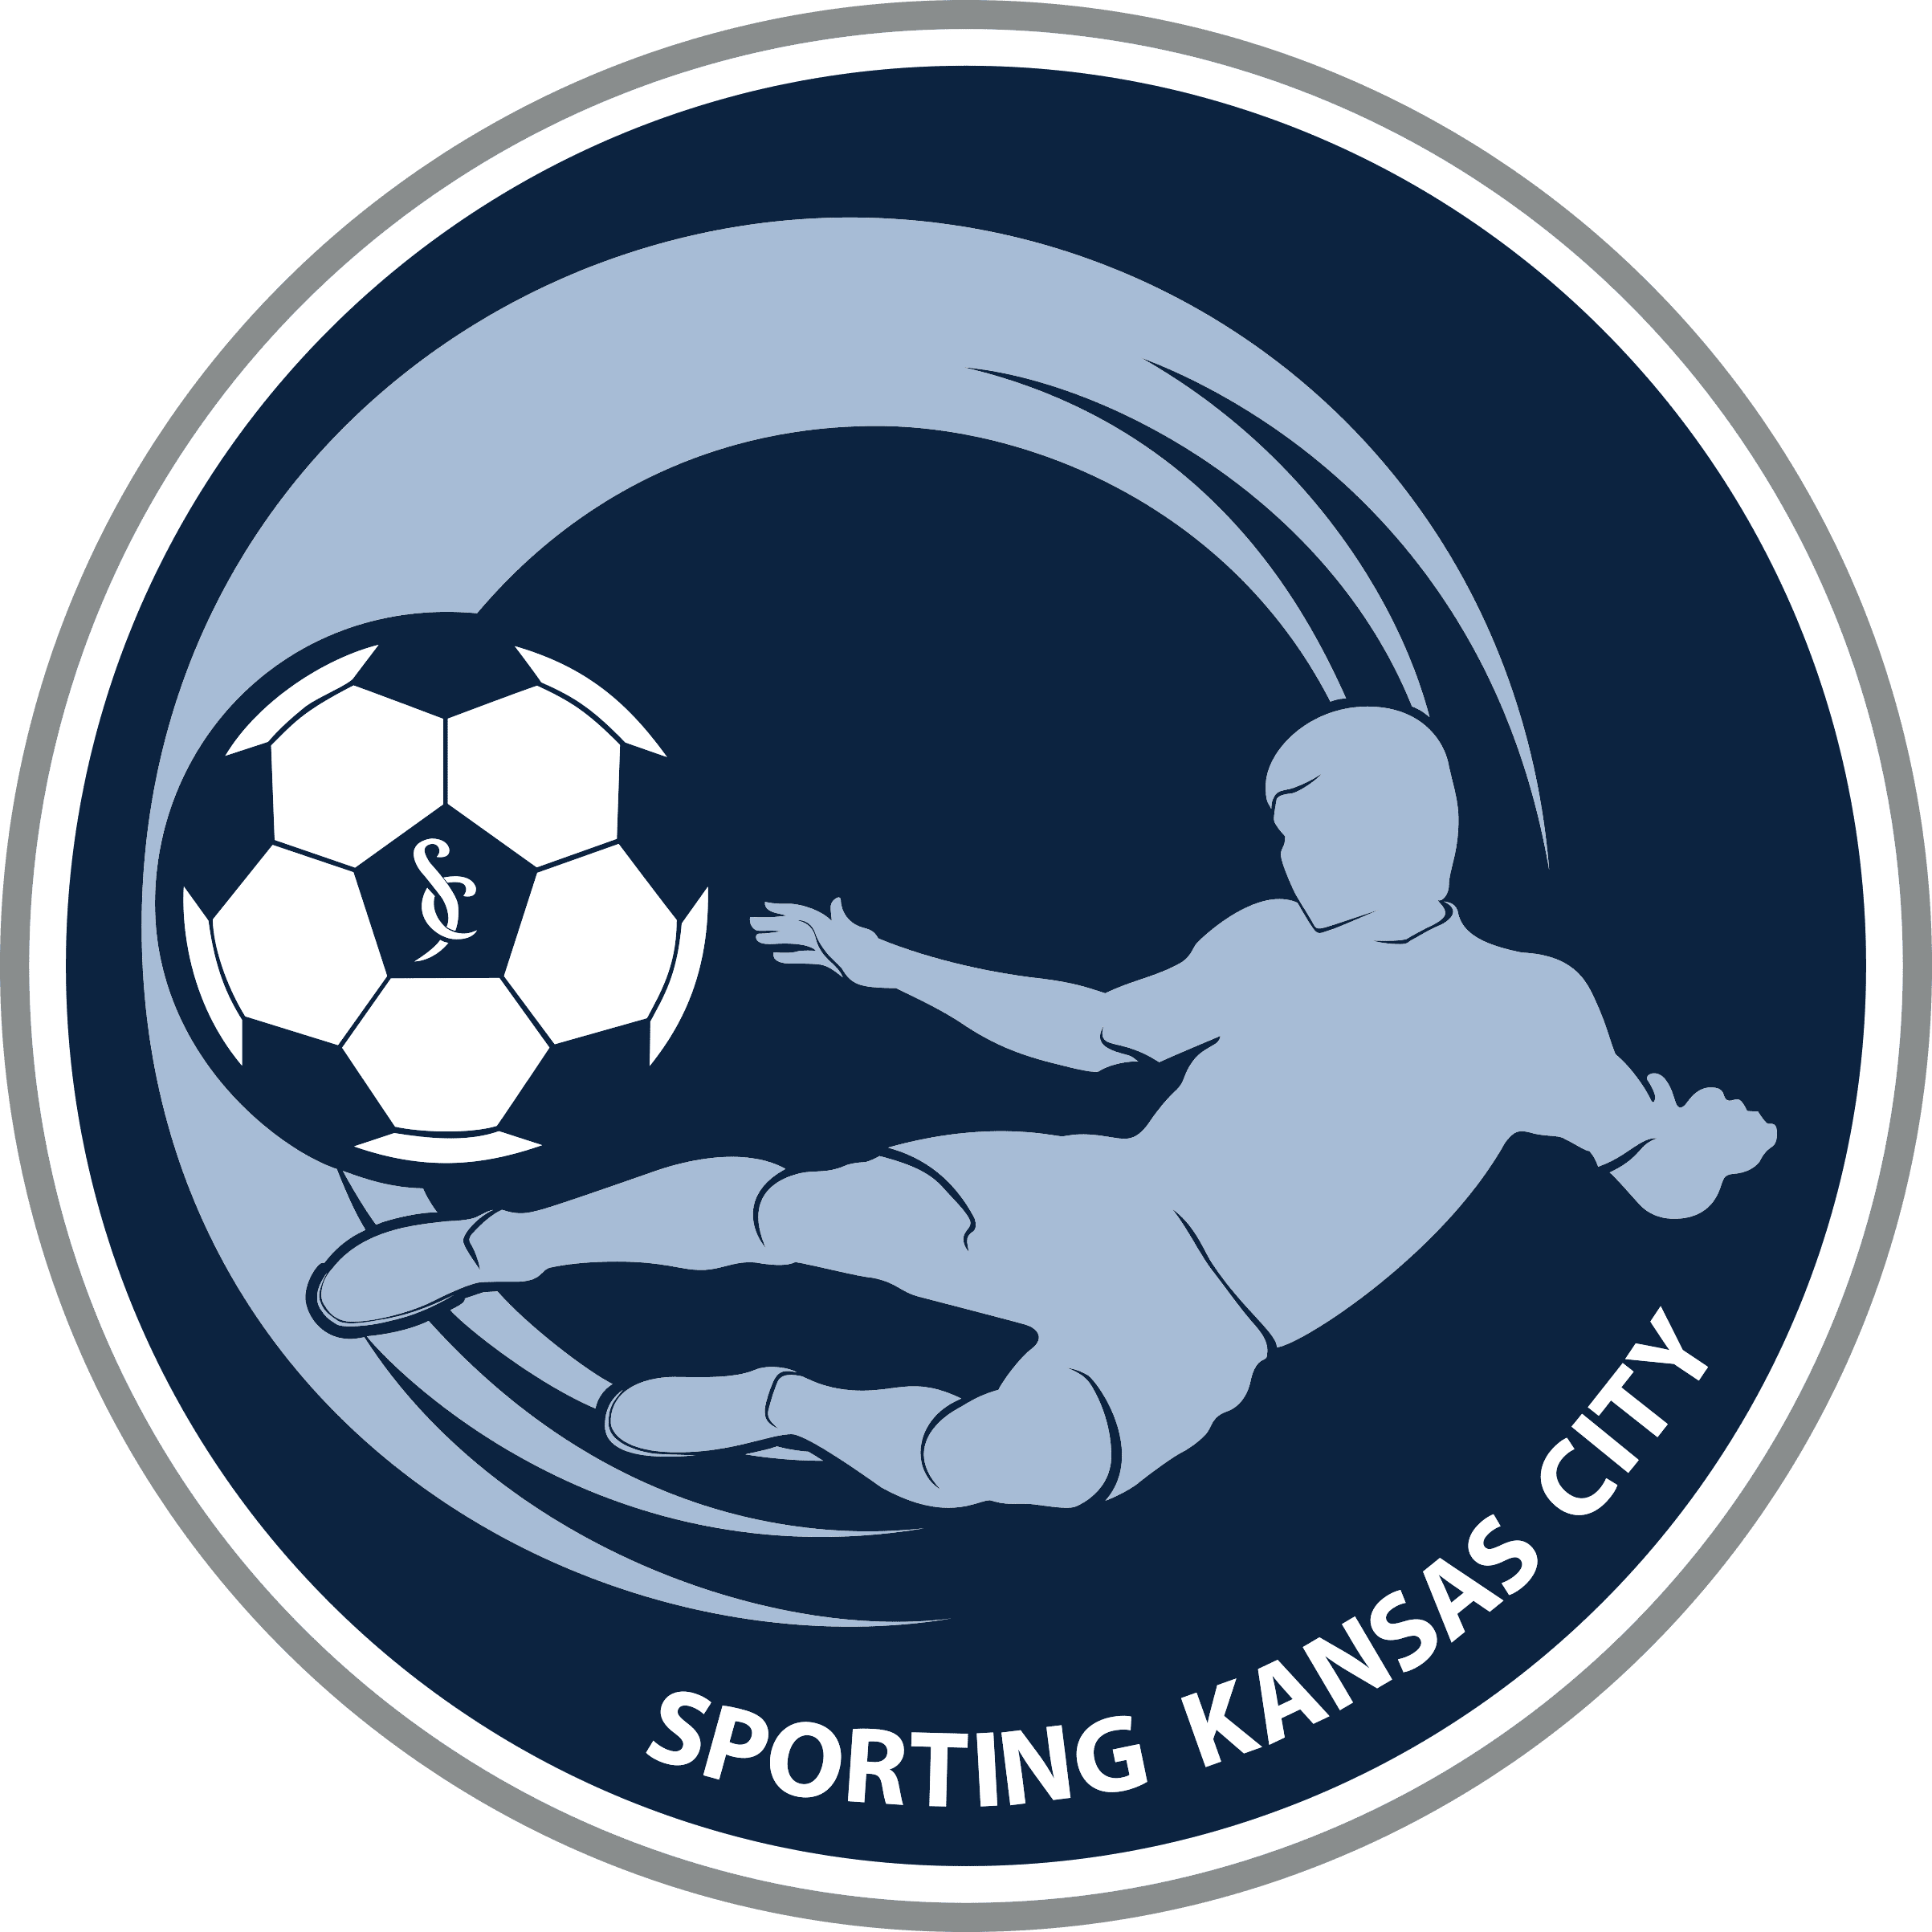 Sporting Logo PNG Transparent & SVG Vector - Freebie Supply